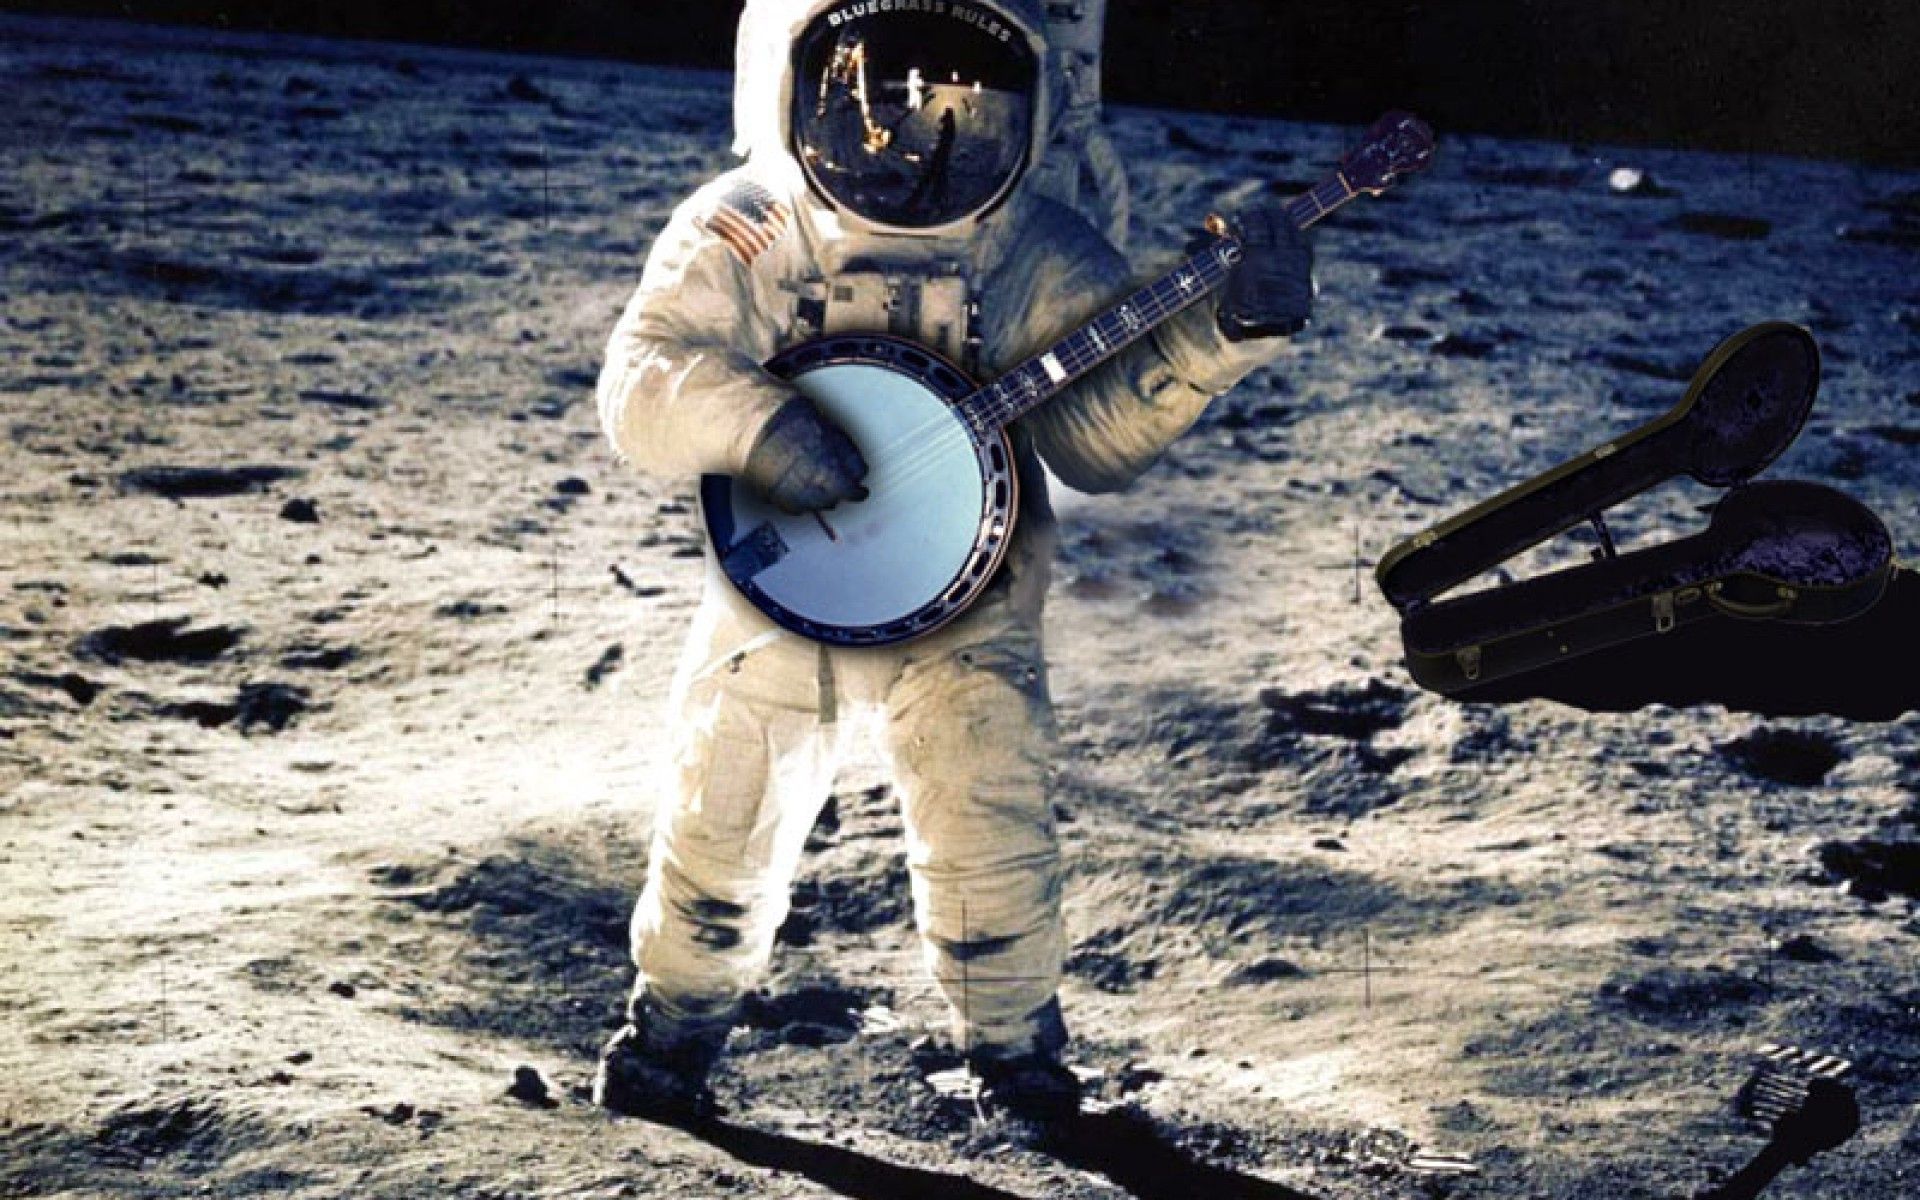 Astronaut Wallpaper High Quality Resolution. Banjo, Banjo music, Astronaut